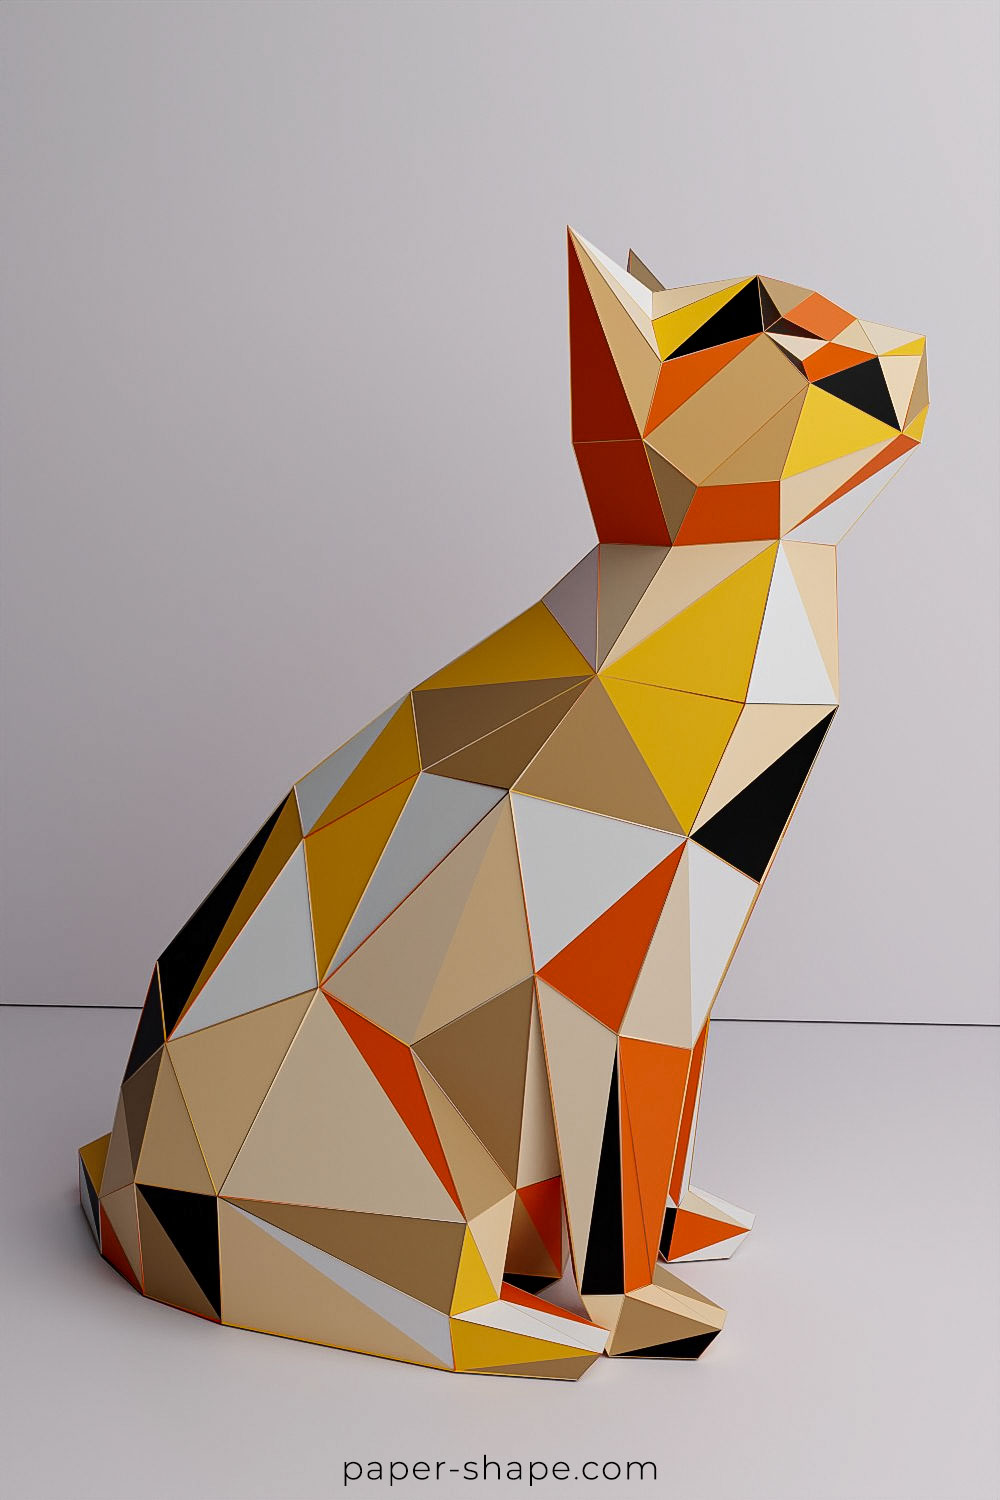 Bemalte Papercraft Katze in Orangetönen